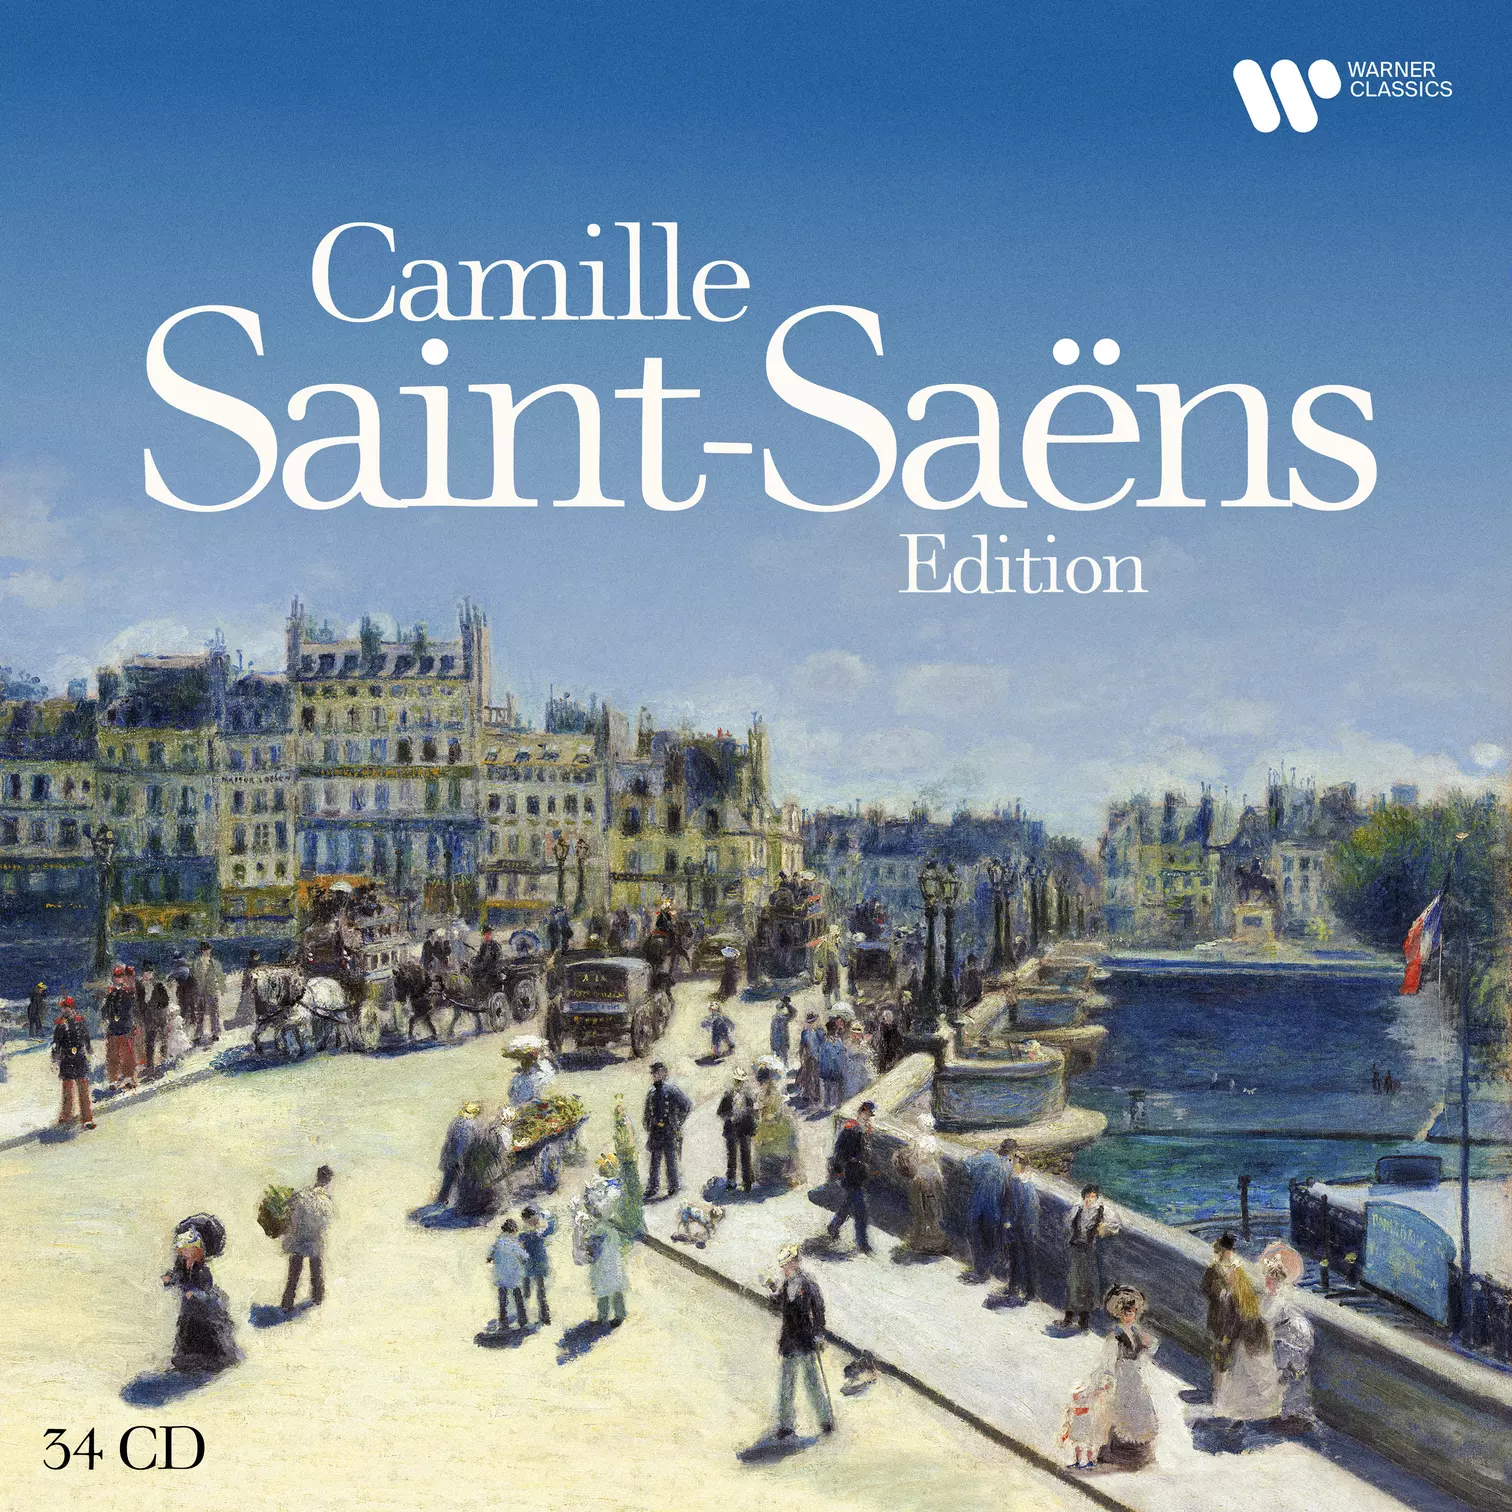 125 Moments: 010 Camille Saint-Saëns